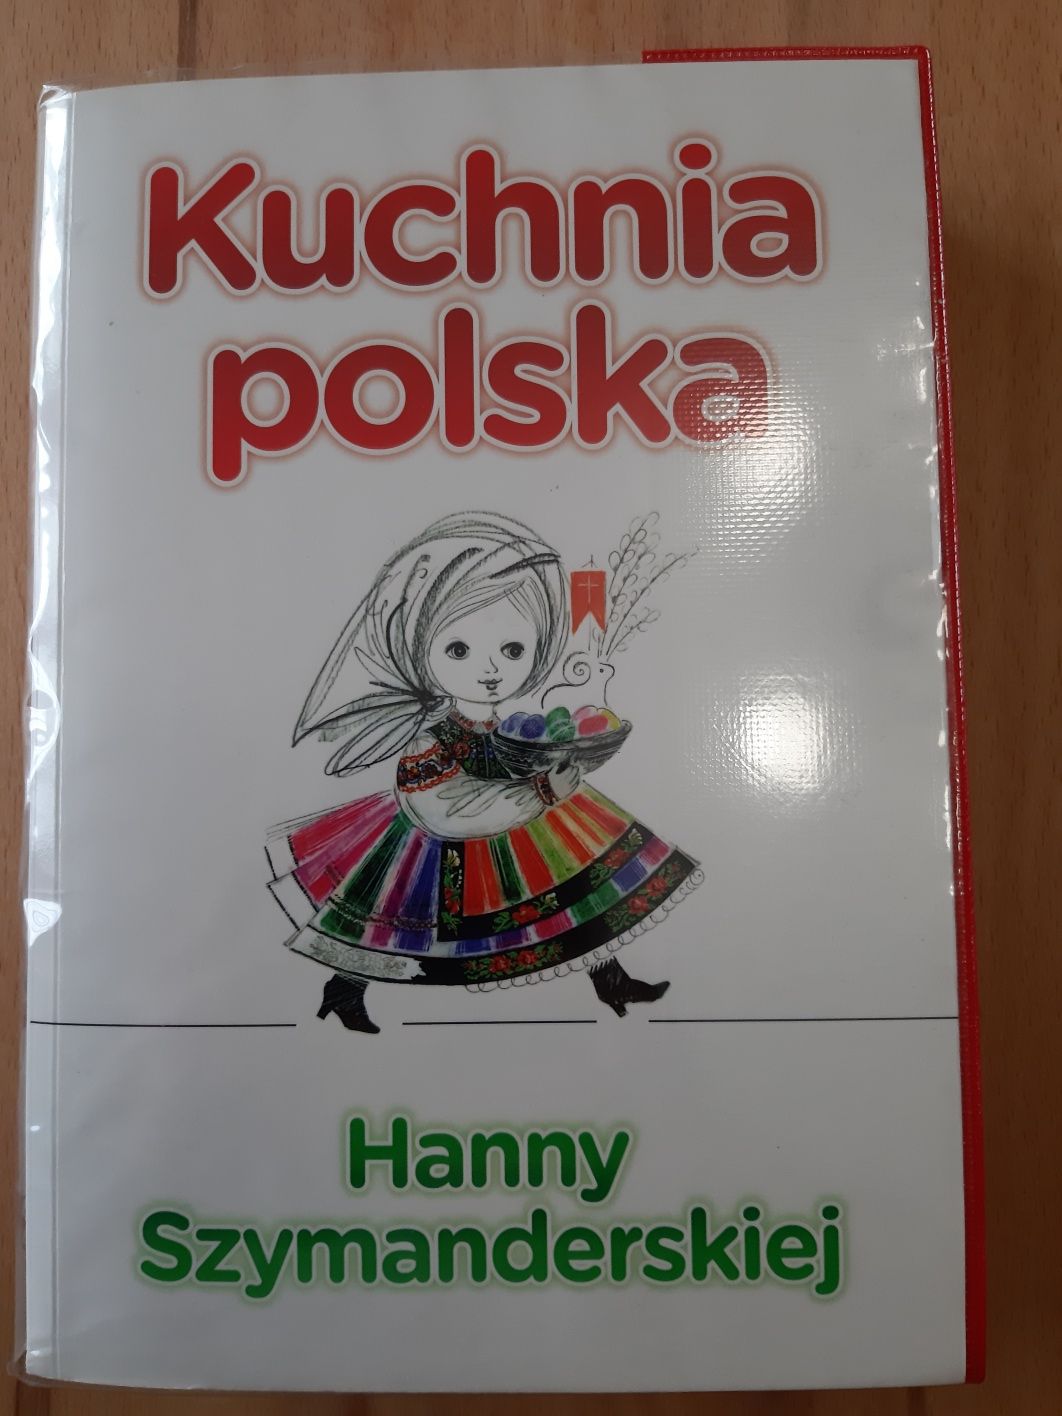 Kuchnia Polska Hanny Szymanderskiej. Książka kucharska